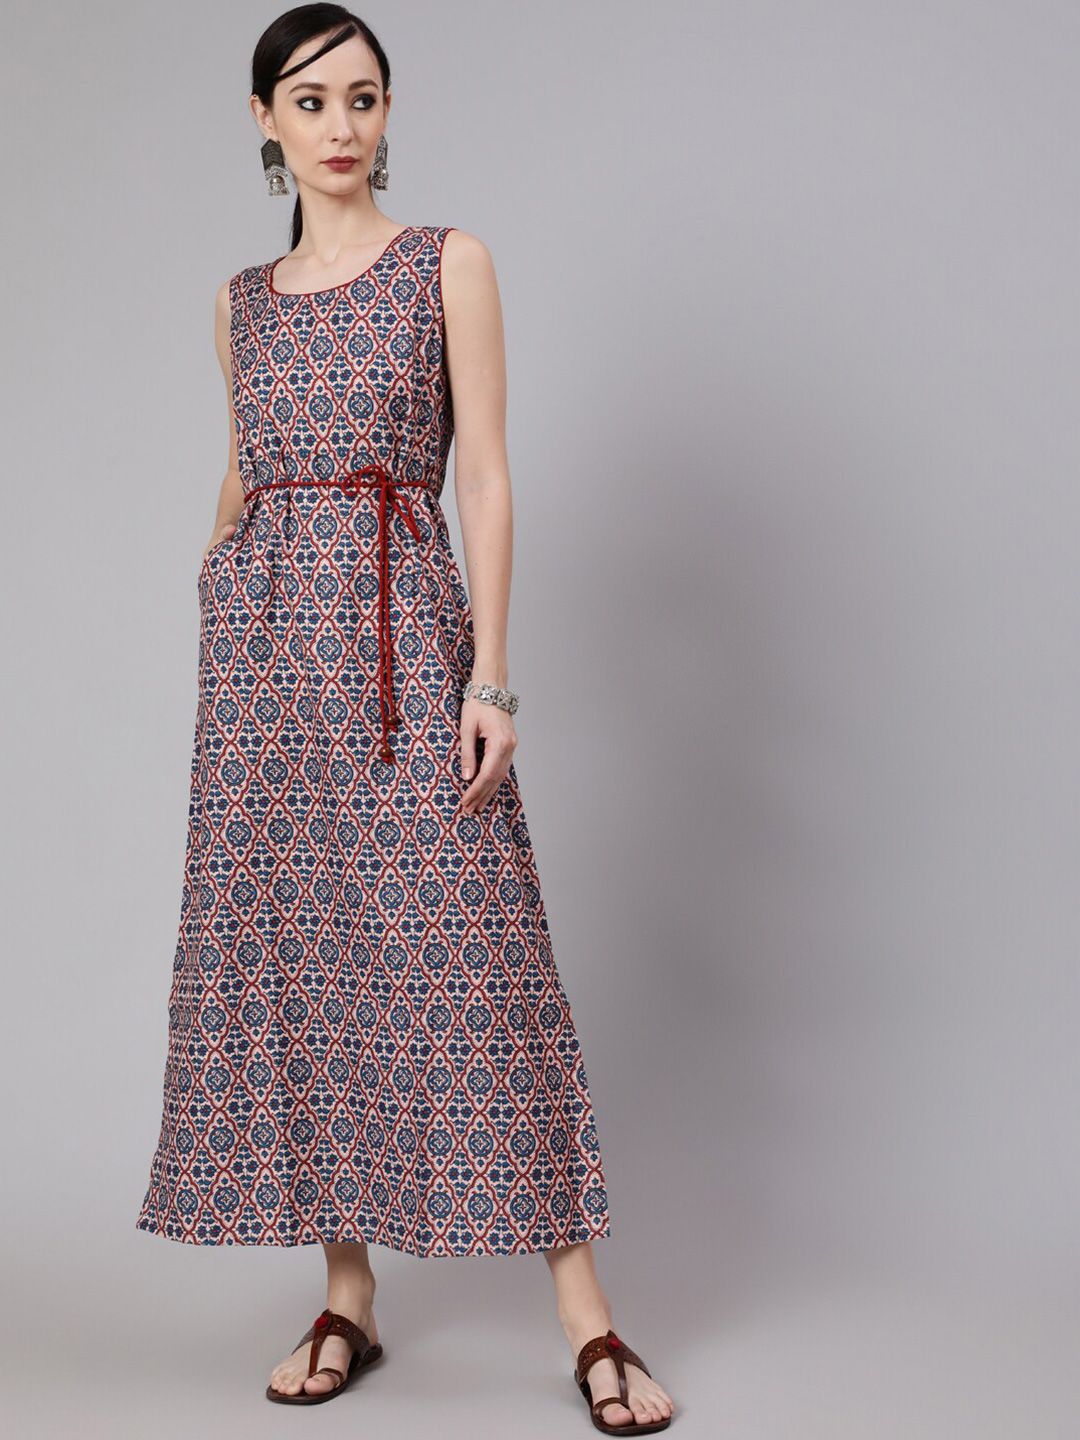 AKS Round Neck Ethnic Motifs Printed Tie-Ups A-Line Cotton Maxi Dress Price in India